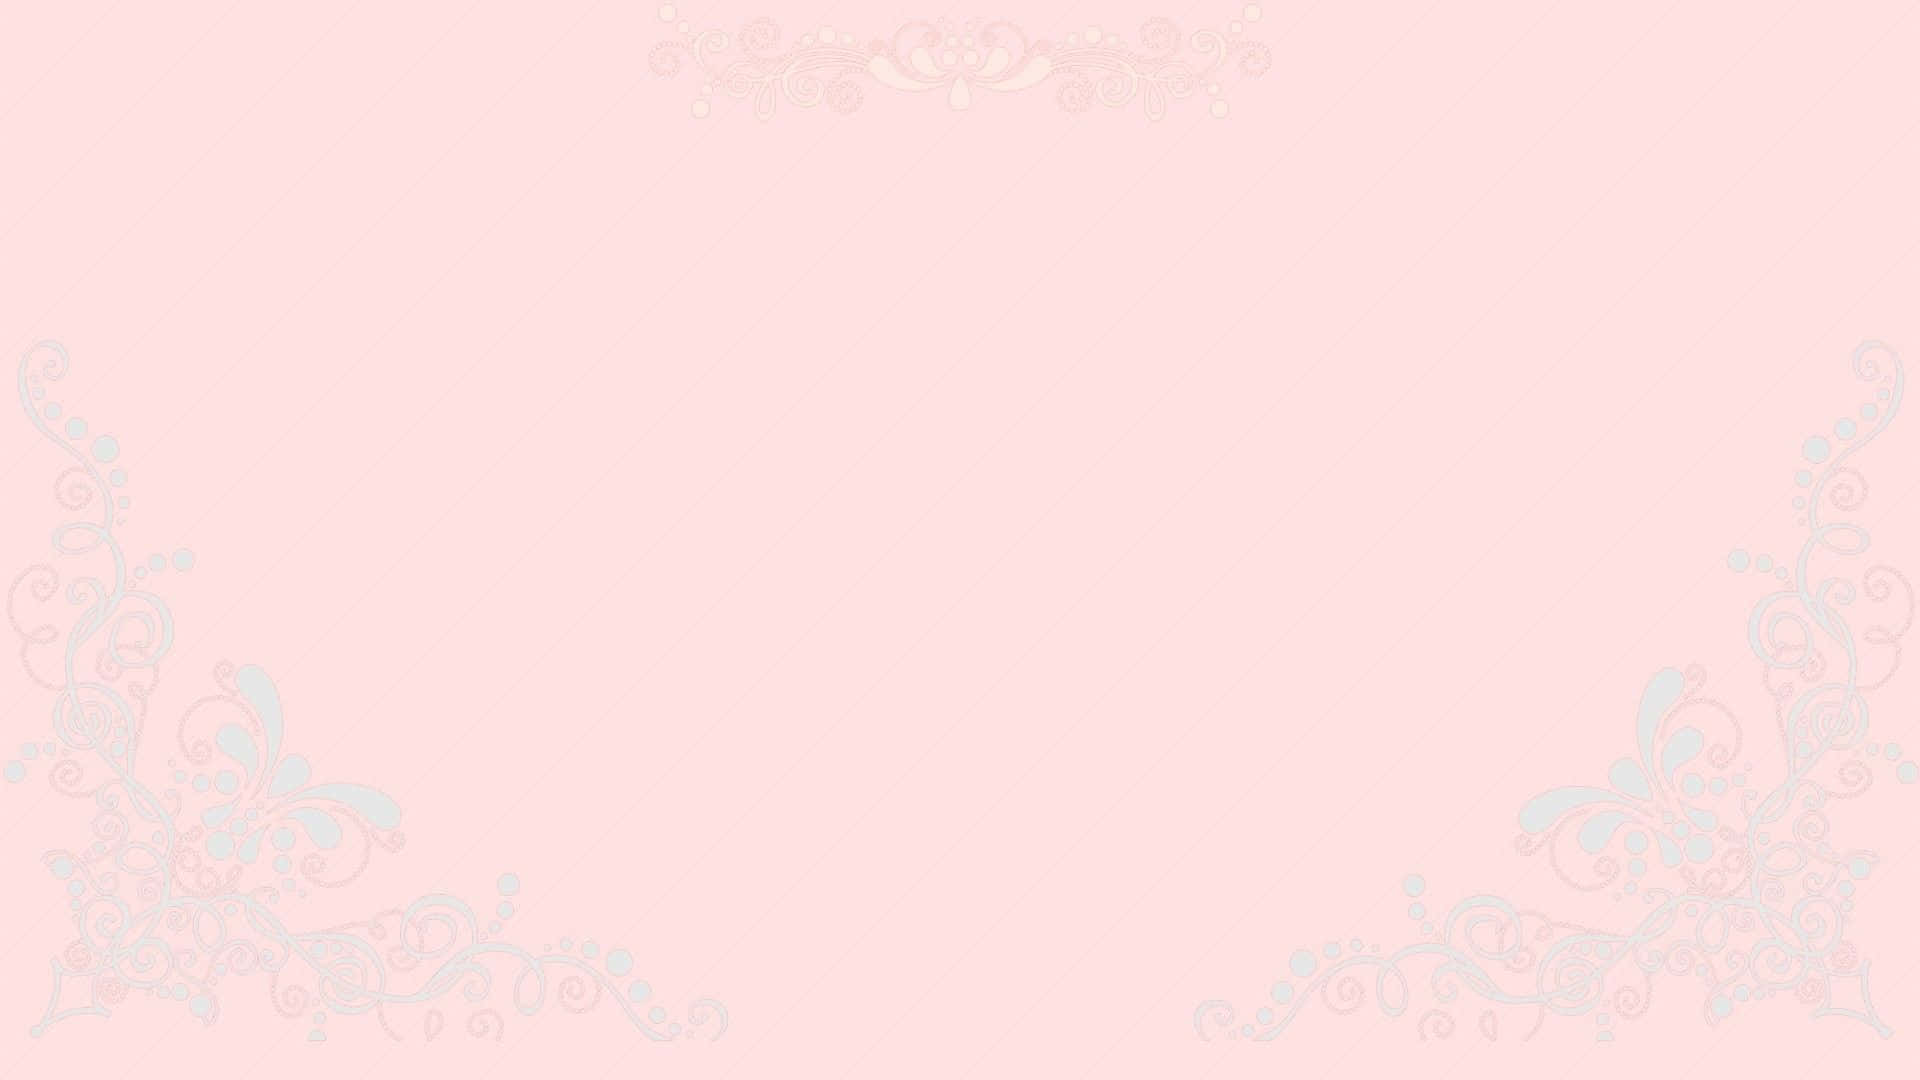 Light pink background with a white filigree corner pattern - Pastel pink